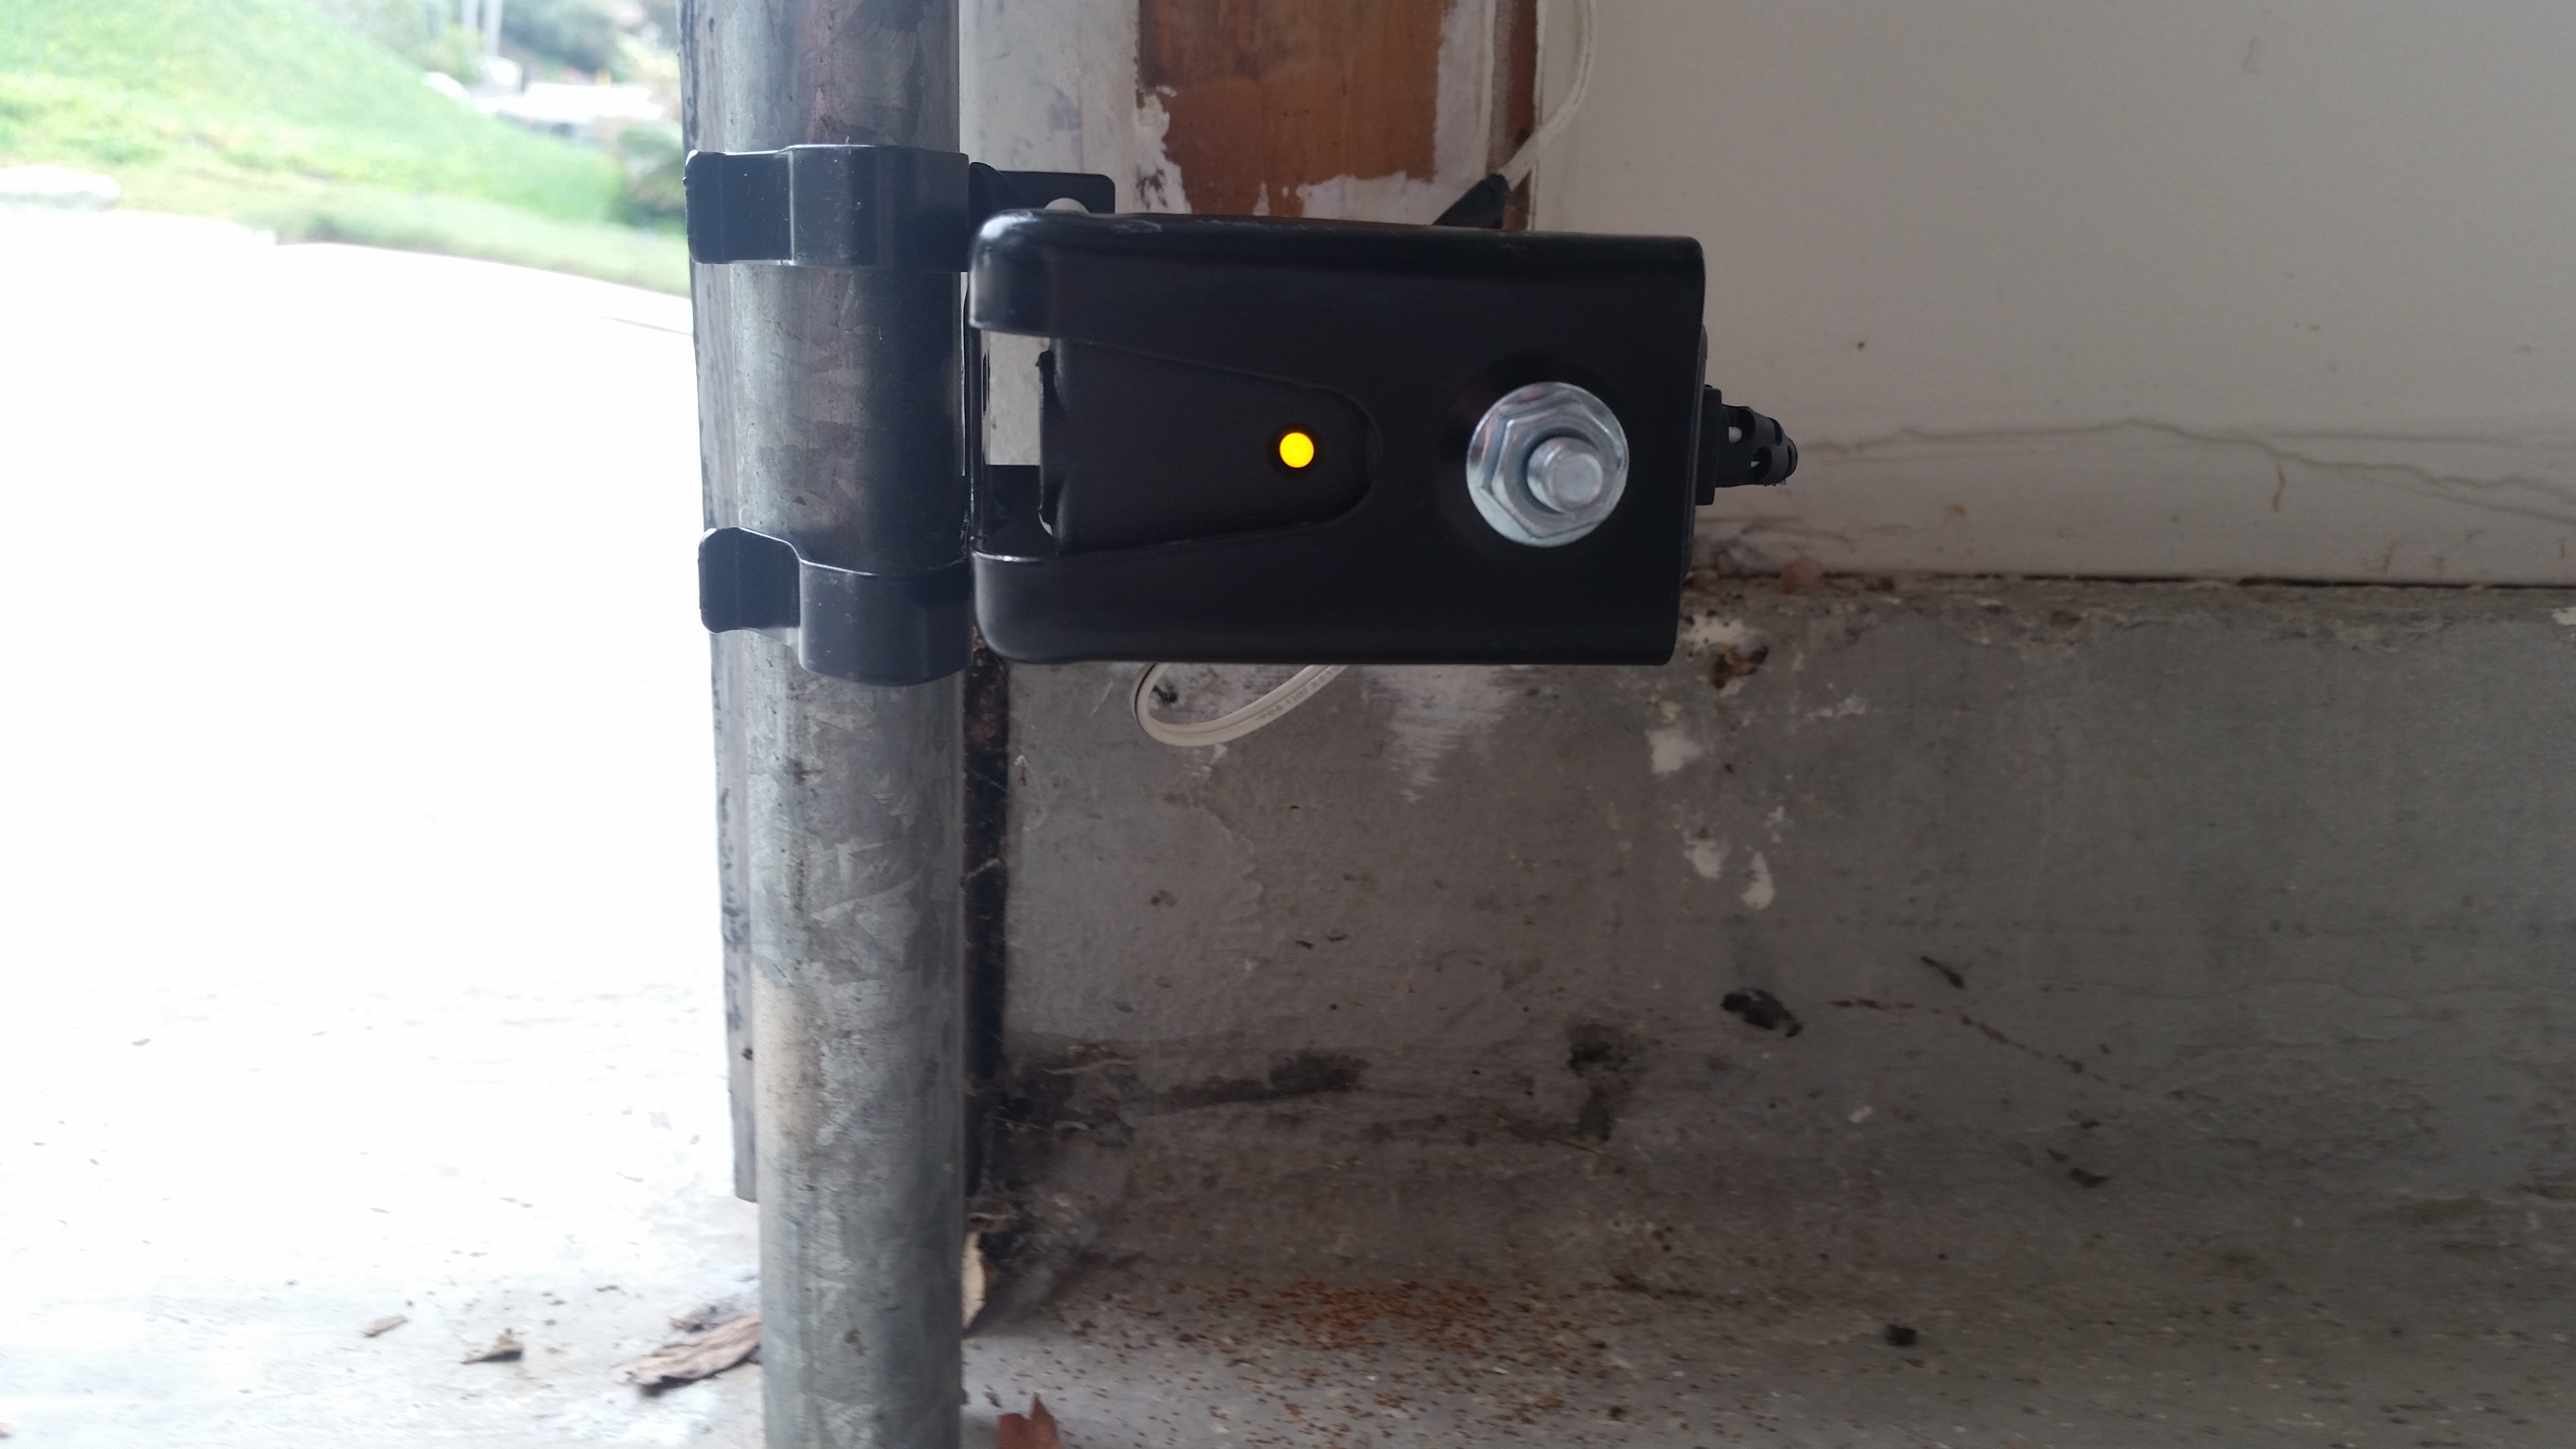 Garage Door Safety Sensor Replacement Fallbrook Diy with regard to dimensions 5312 X 2988